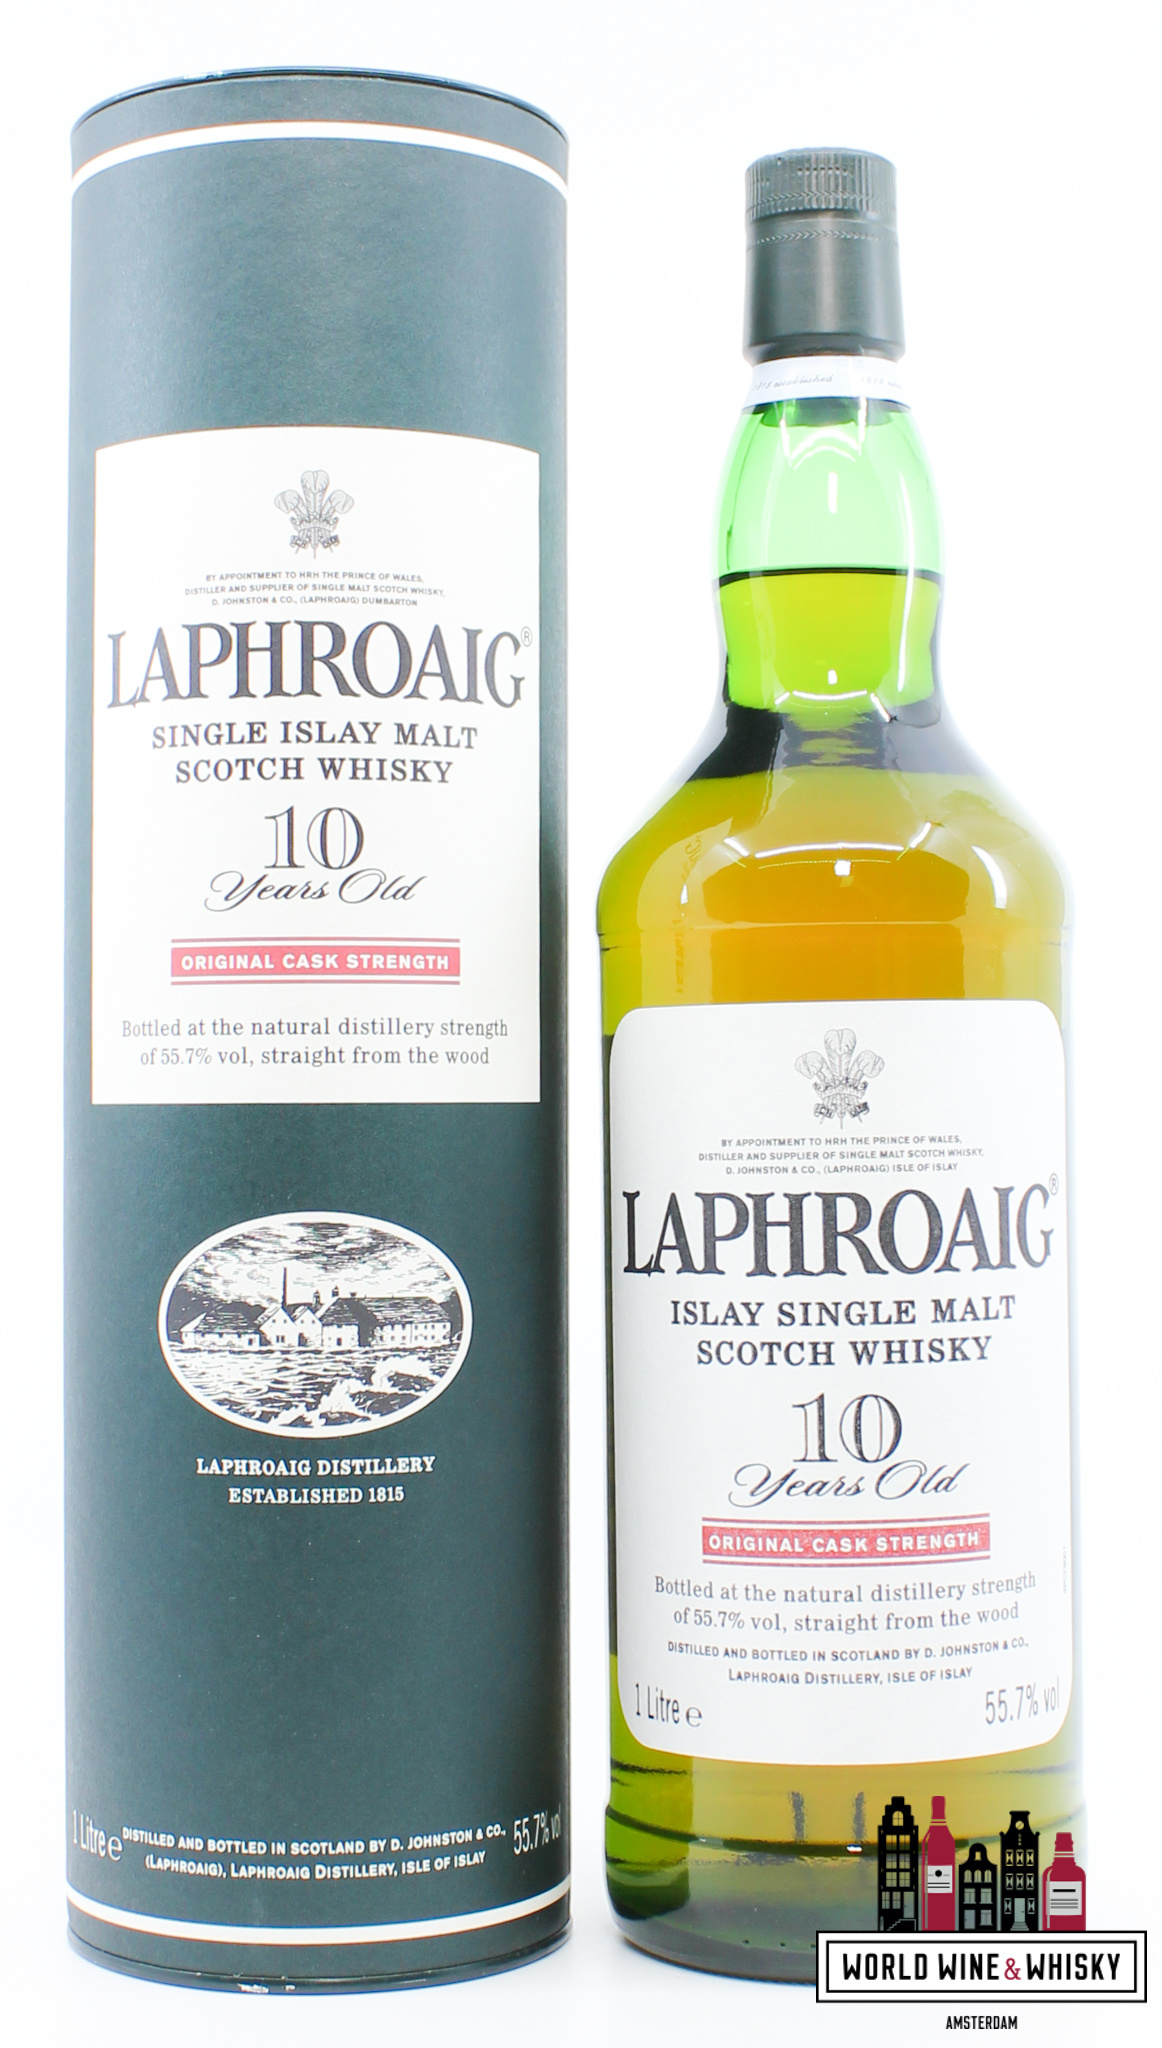 Laphroaig 10 Years Old - Original Cask Strength 55.7% - 1 liter - World  Wine & Whisky